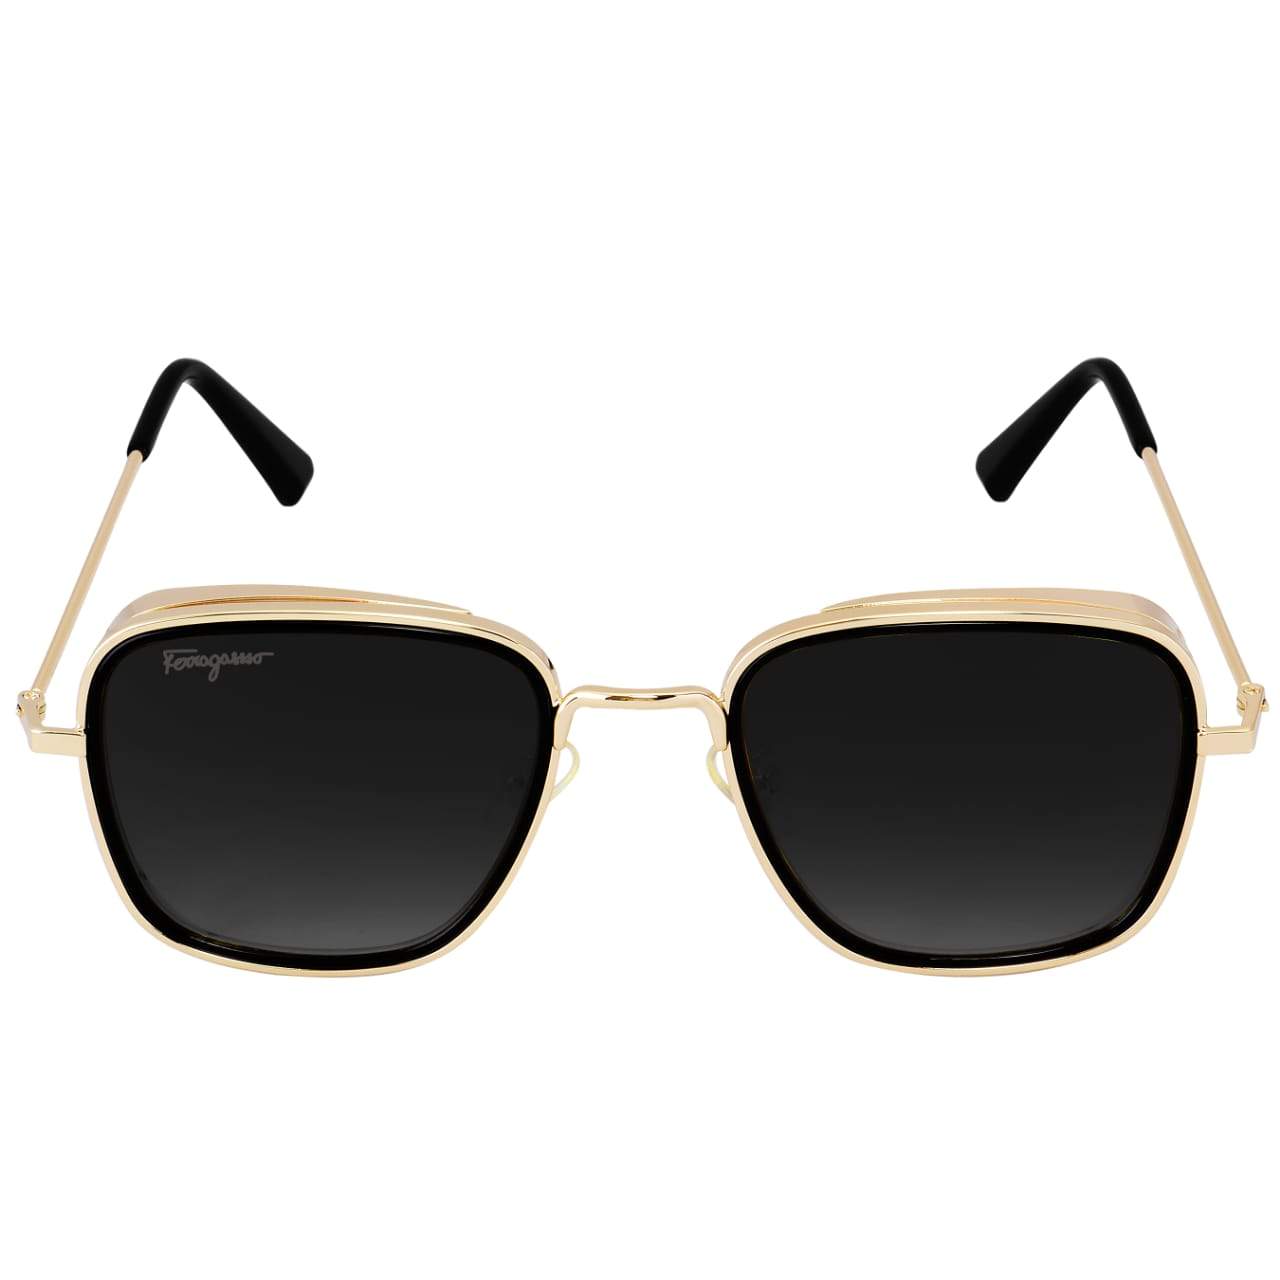 Stylish Square Gold Black Sunglasses For Men And Women-Unique and Classy